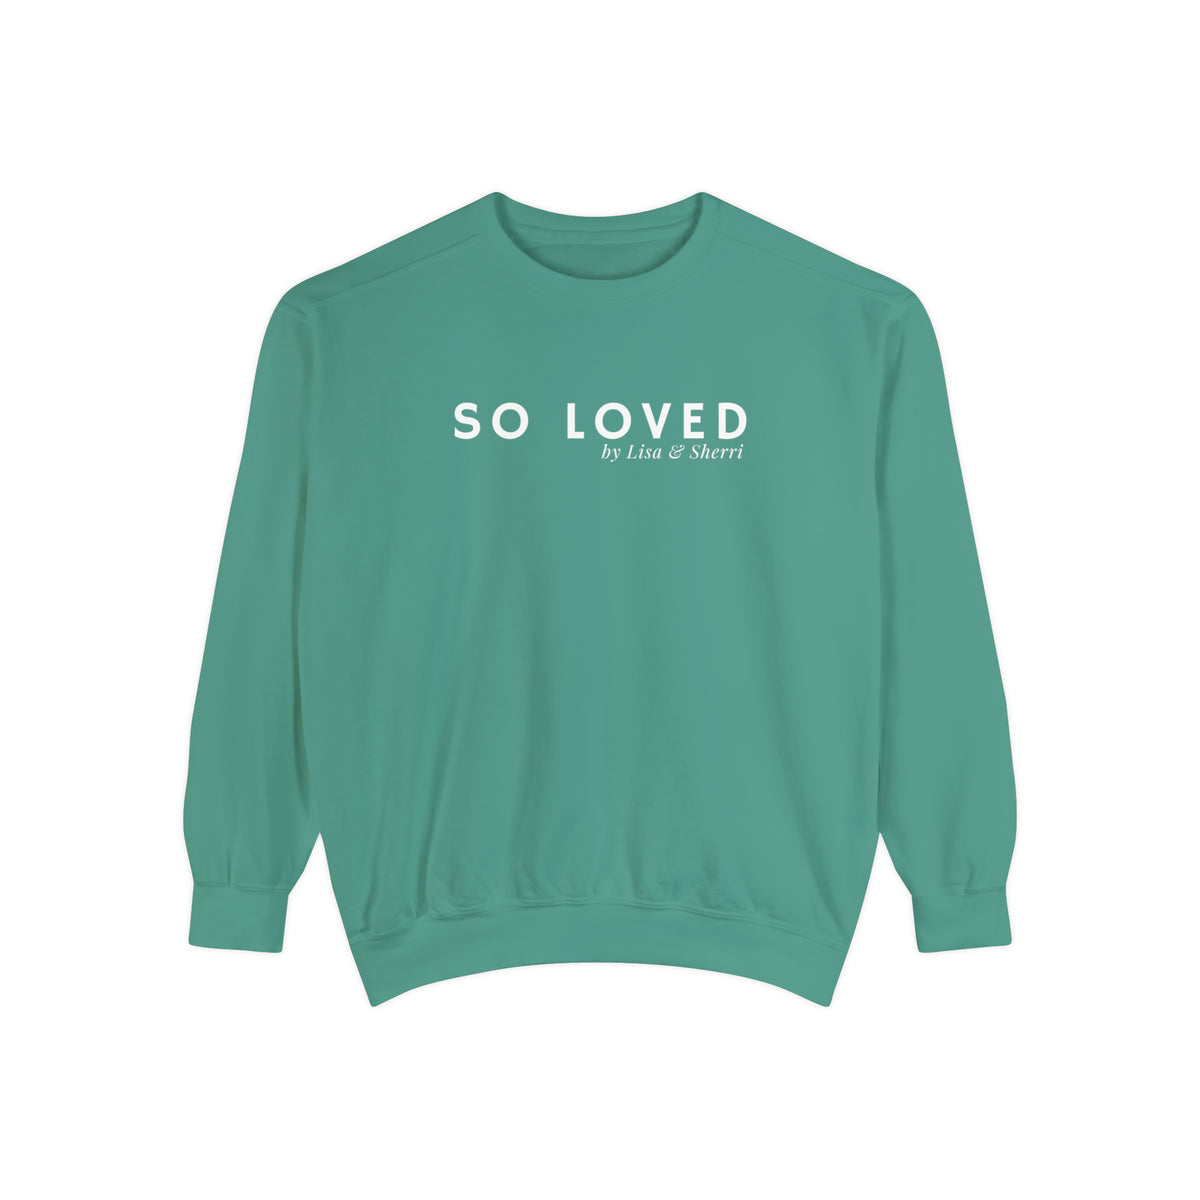 Personalized So Loved Sweatshirt